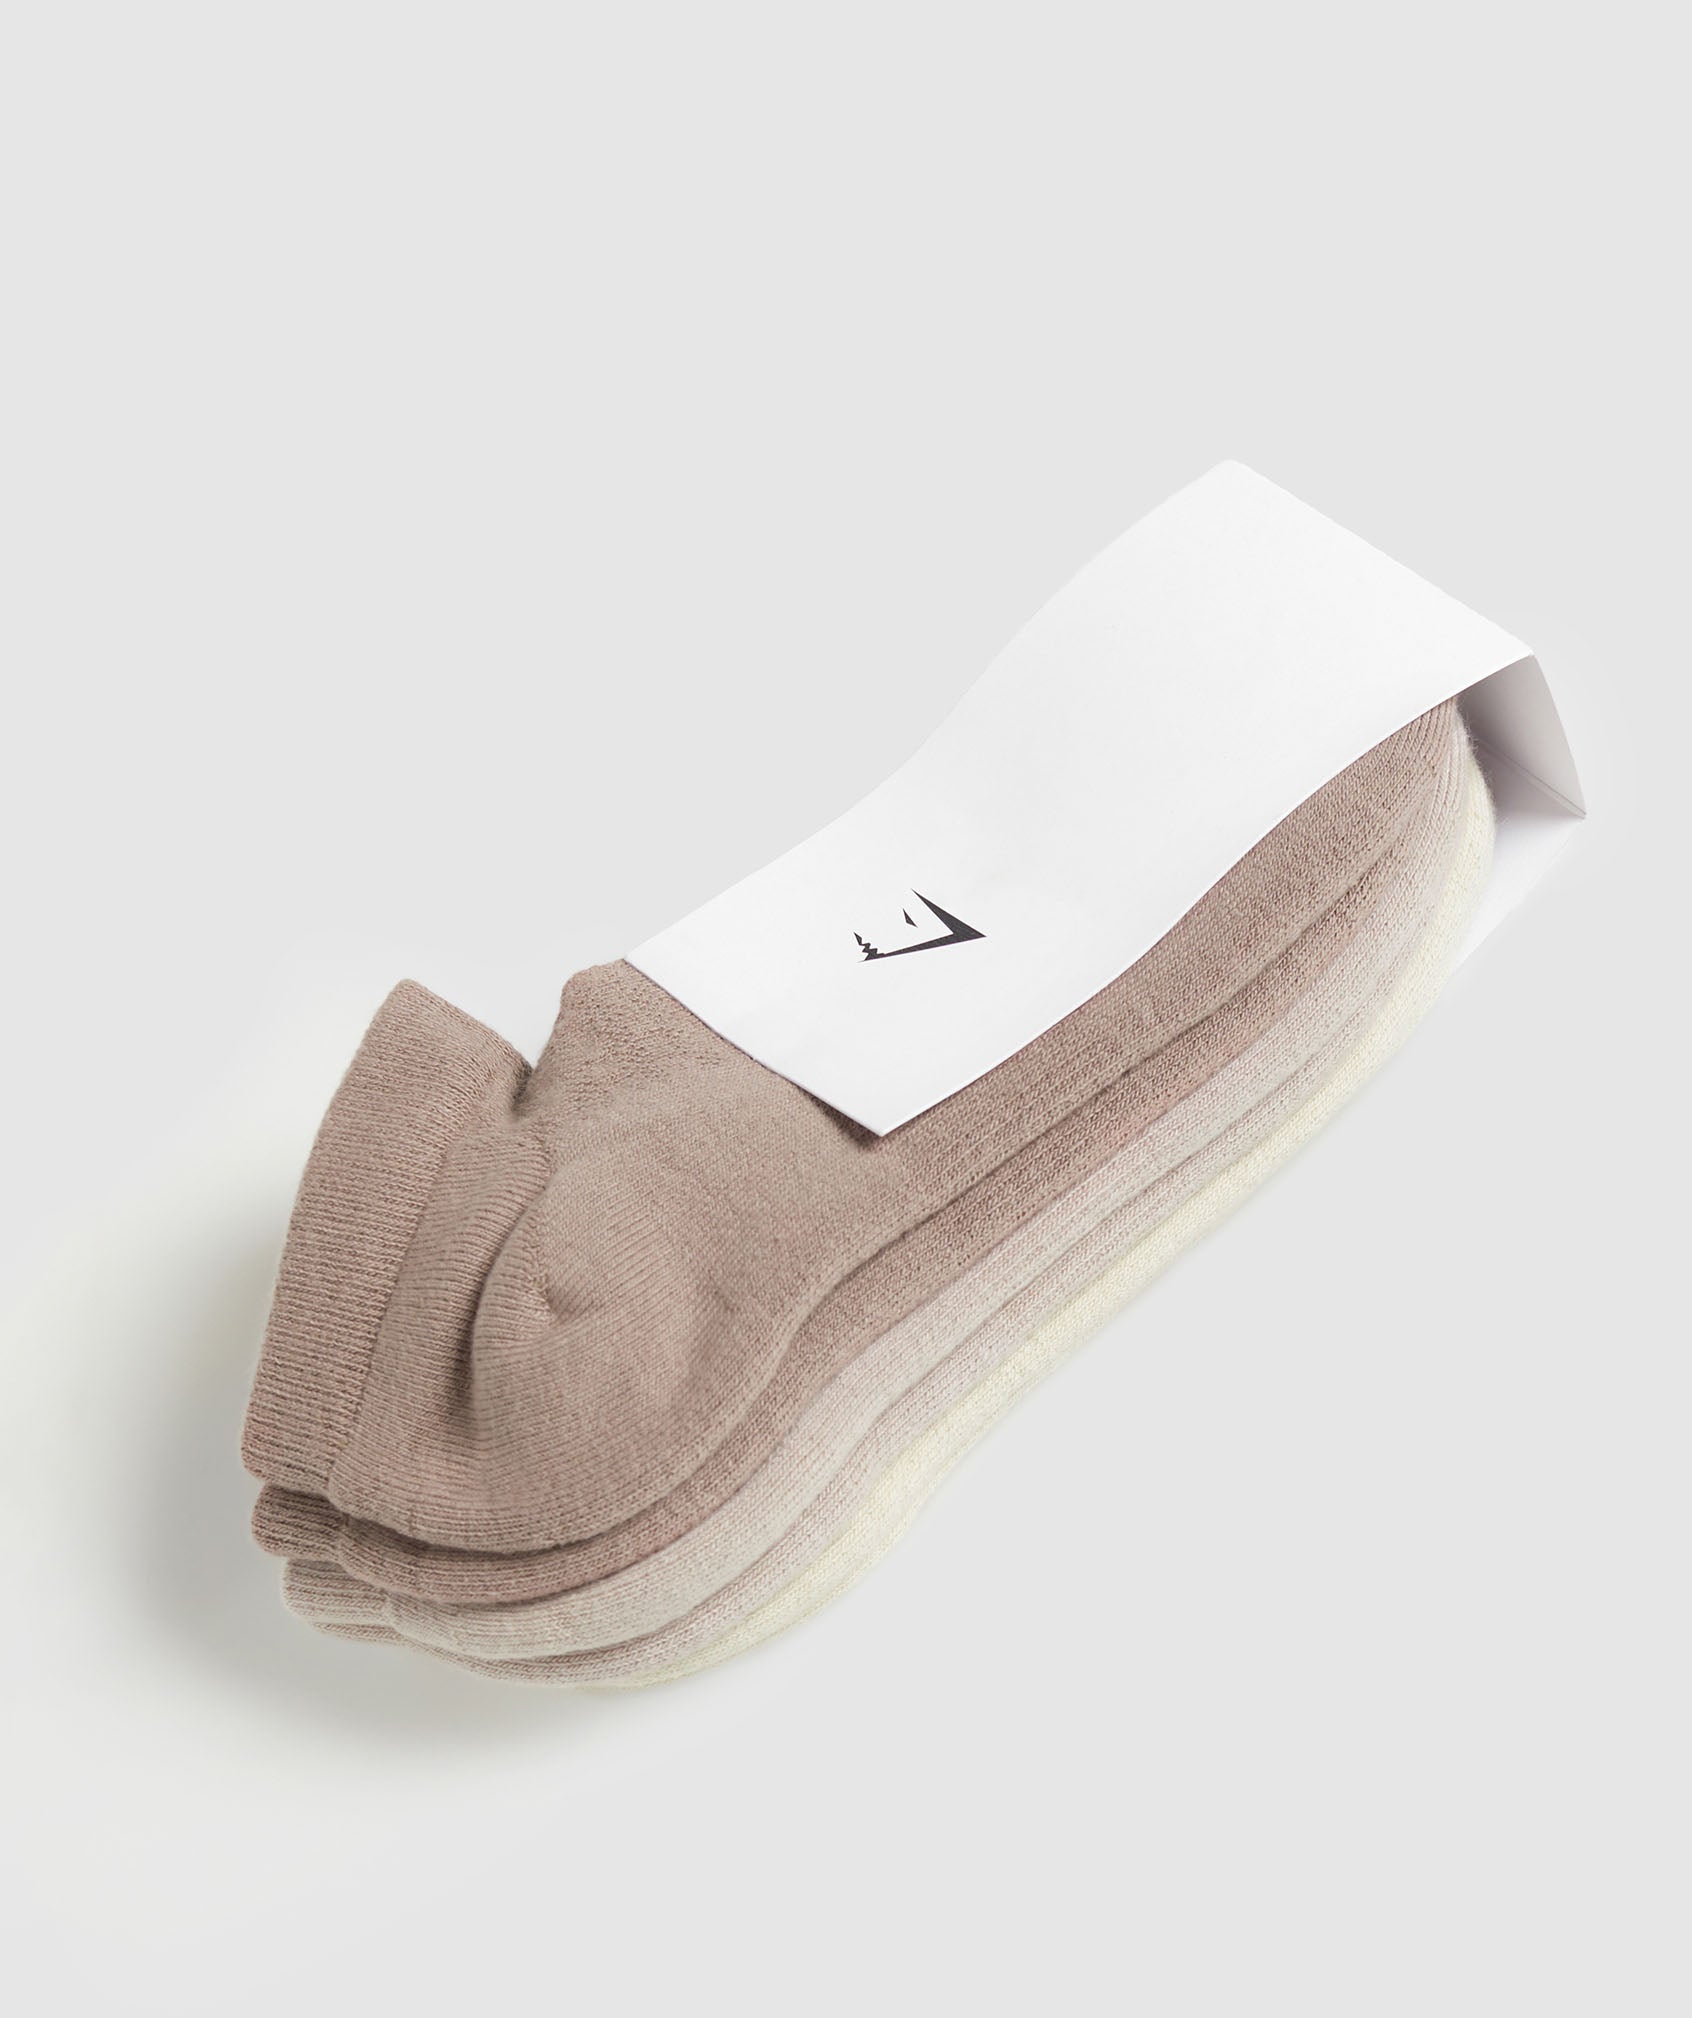 Ankle Socks 3pk in Mocha Mauve/Stone Pink/Ecru White - view 3